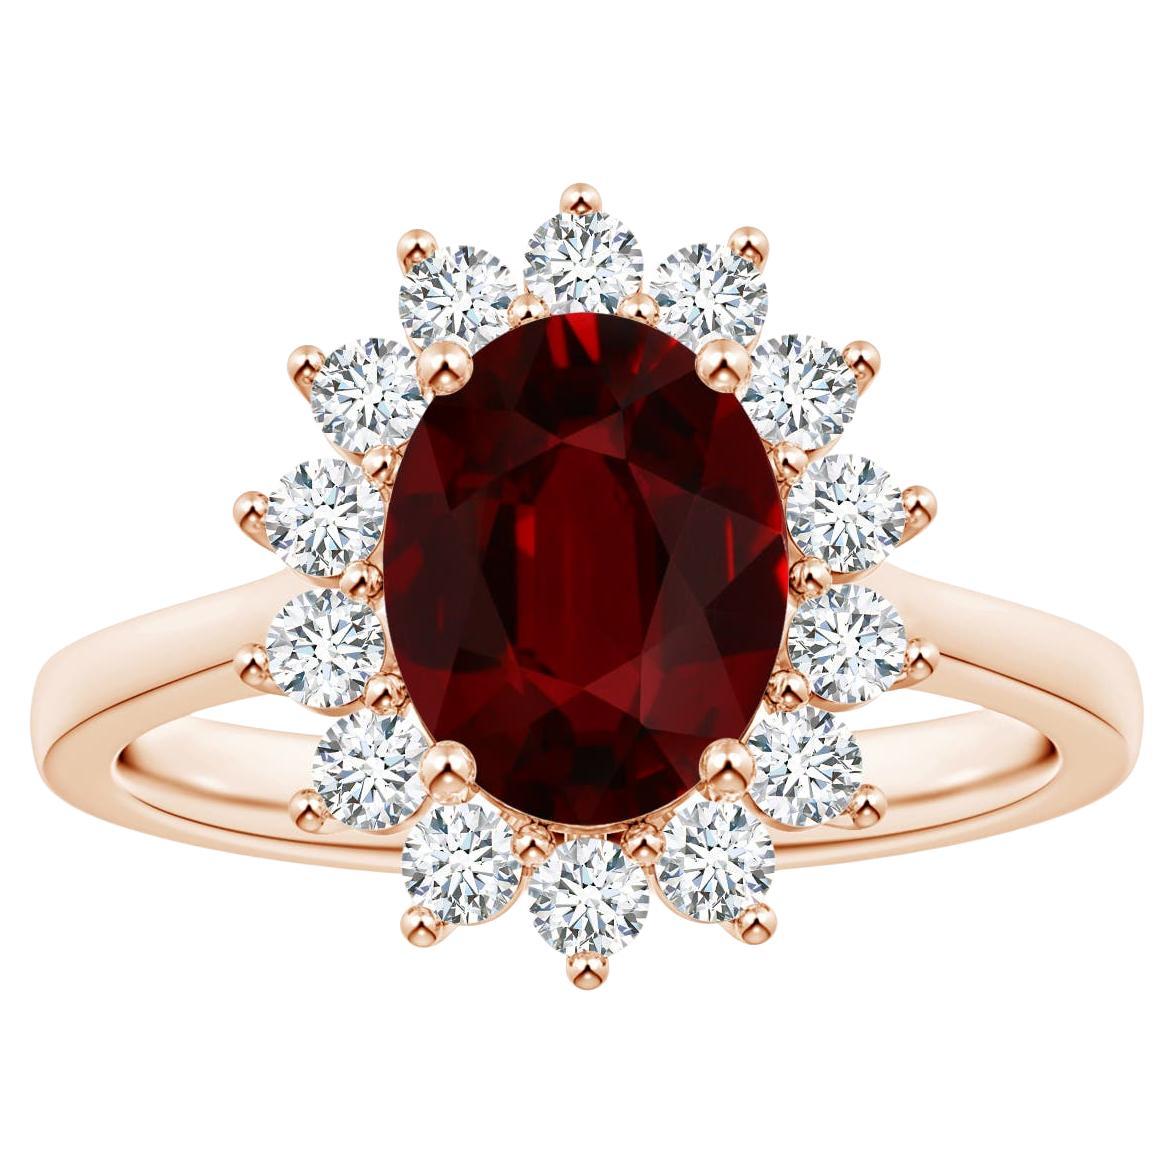 ANGARA Prinzessin Diana inspirierter GIA-zertifizierter Rubin-Halo-Ring aus Roségold